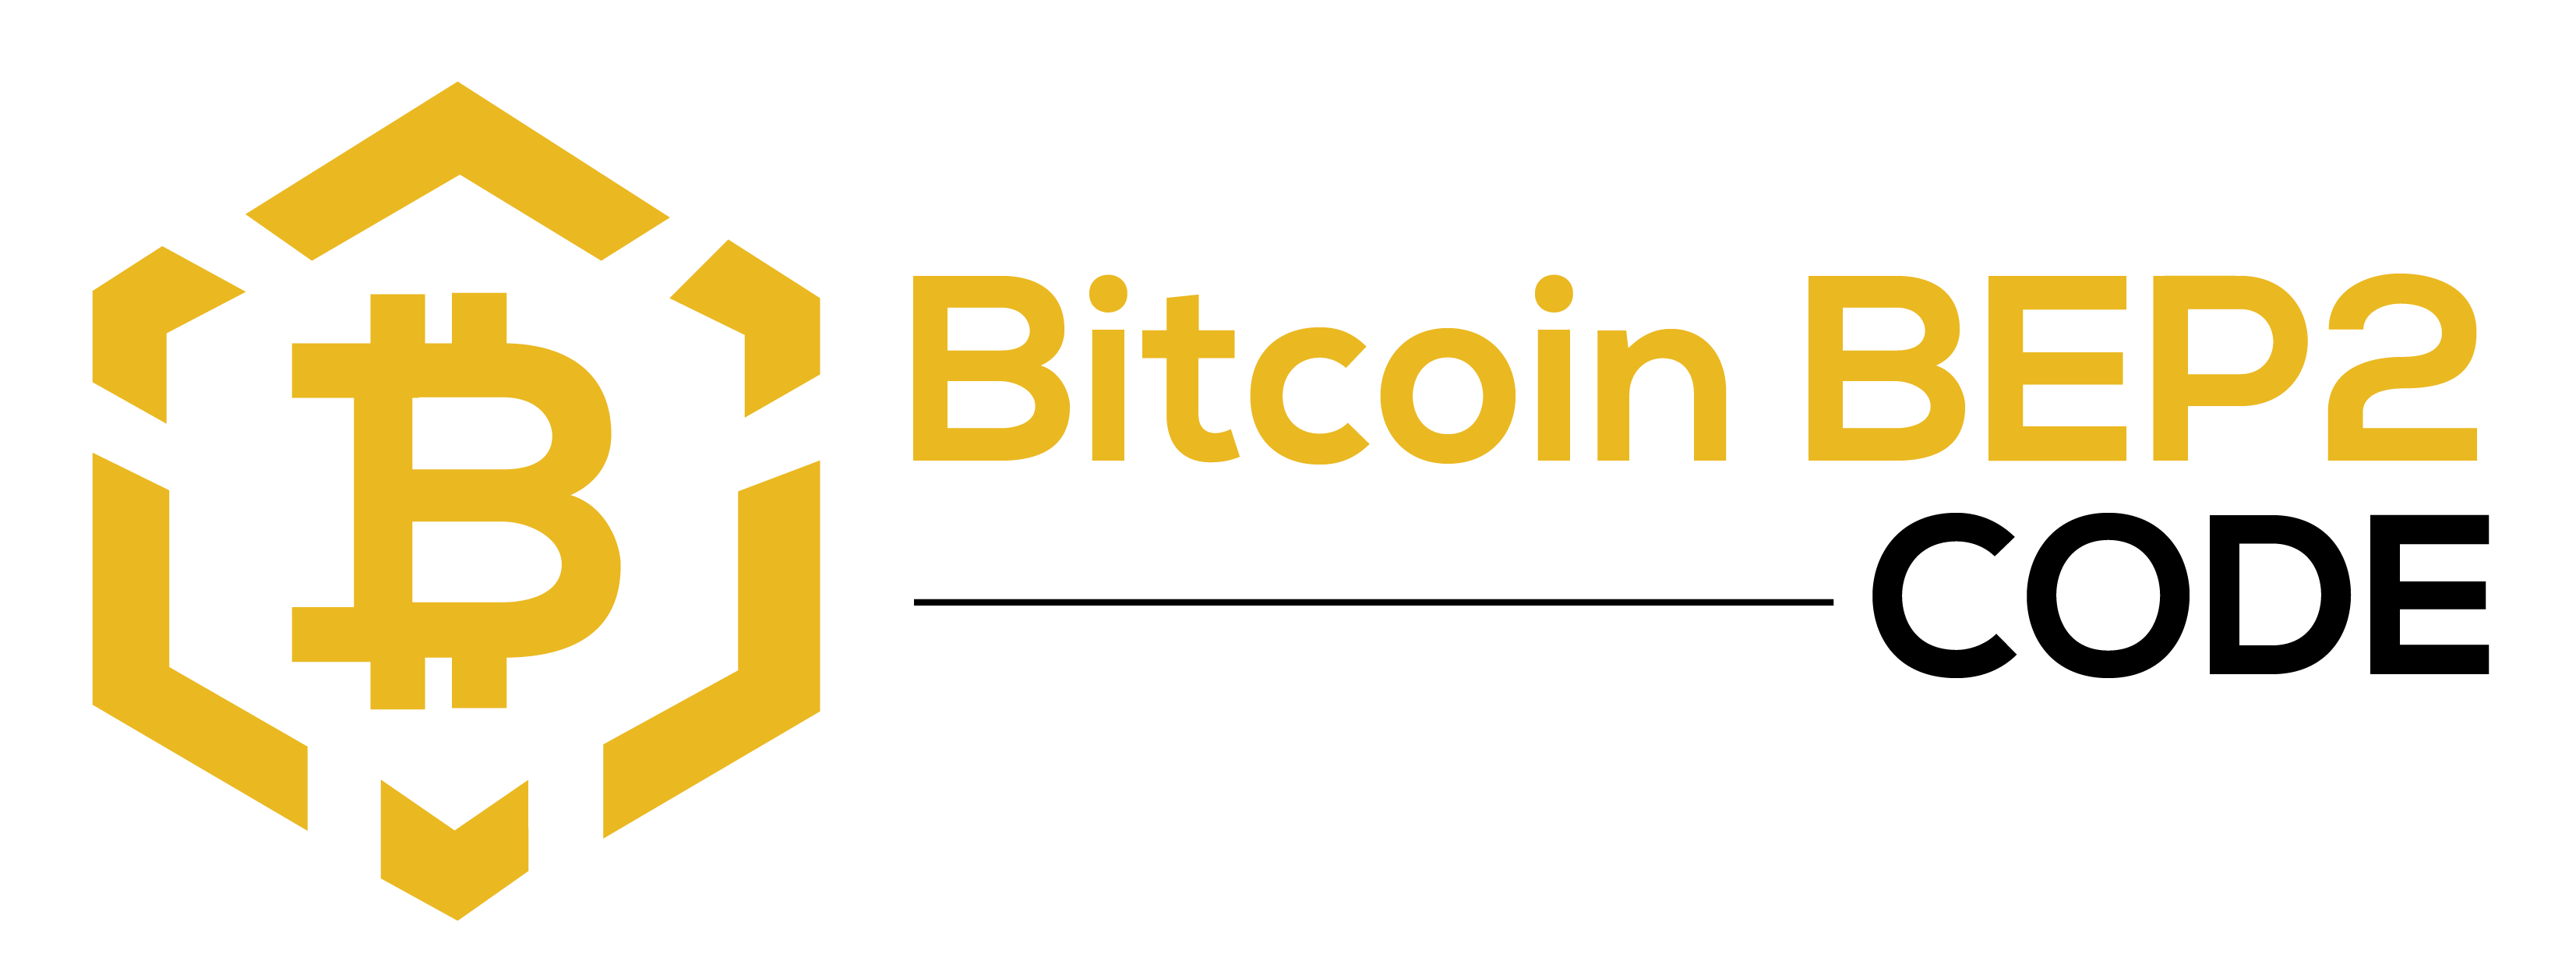 Bitcoin BEP2 Code - Ελάτε σε επαφή μαζί μας